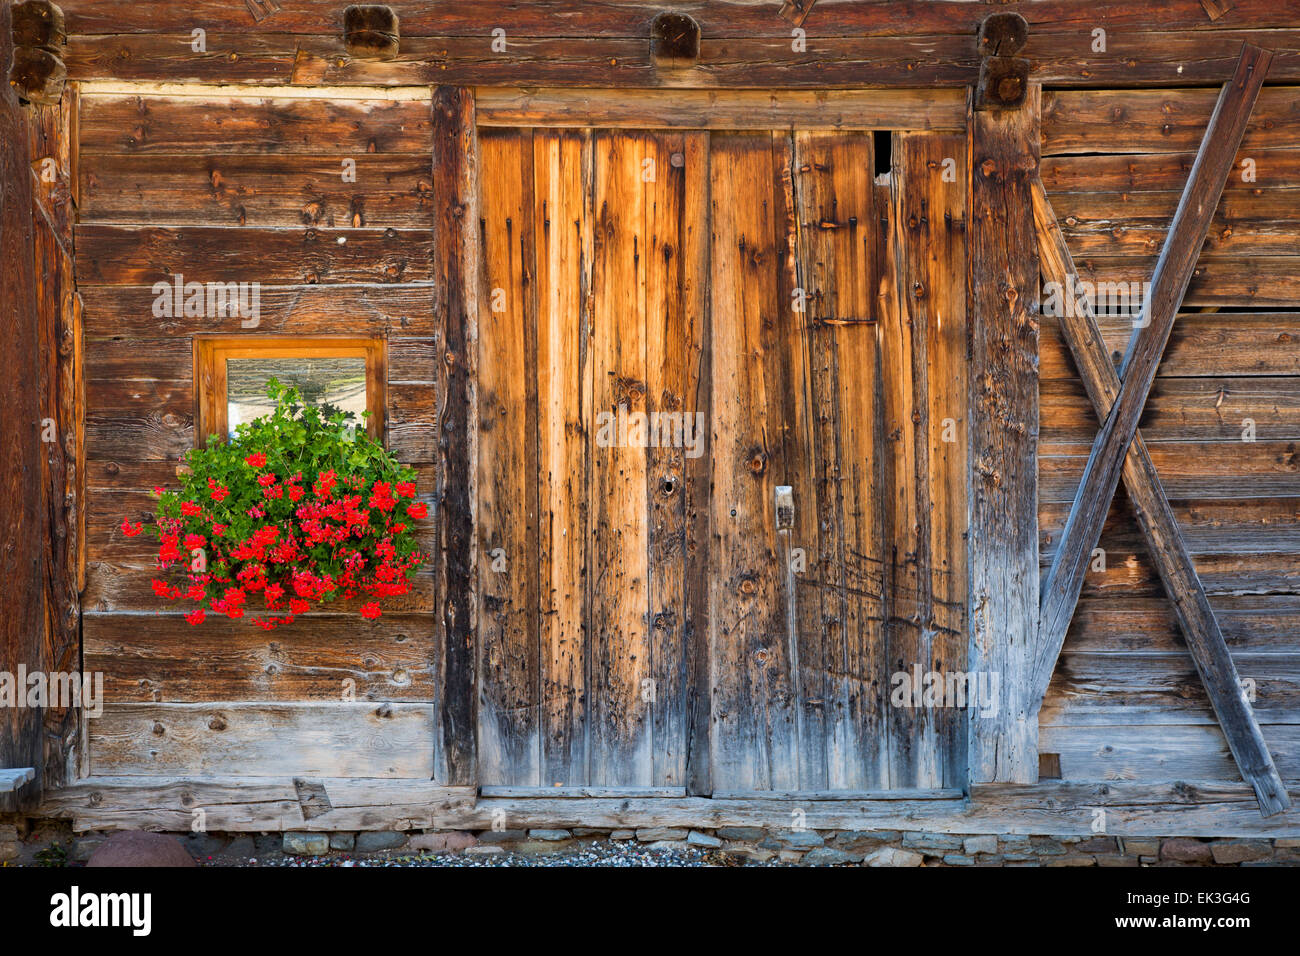 Rustic Barn Door and flowers, Santa Maddelena, Val di Funes, Trentino-Alto-Adige, Italy Stock Photo